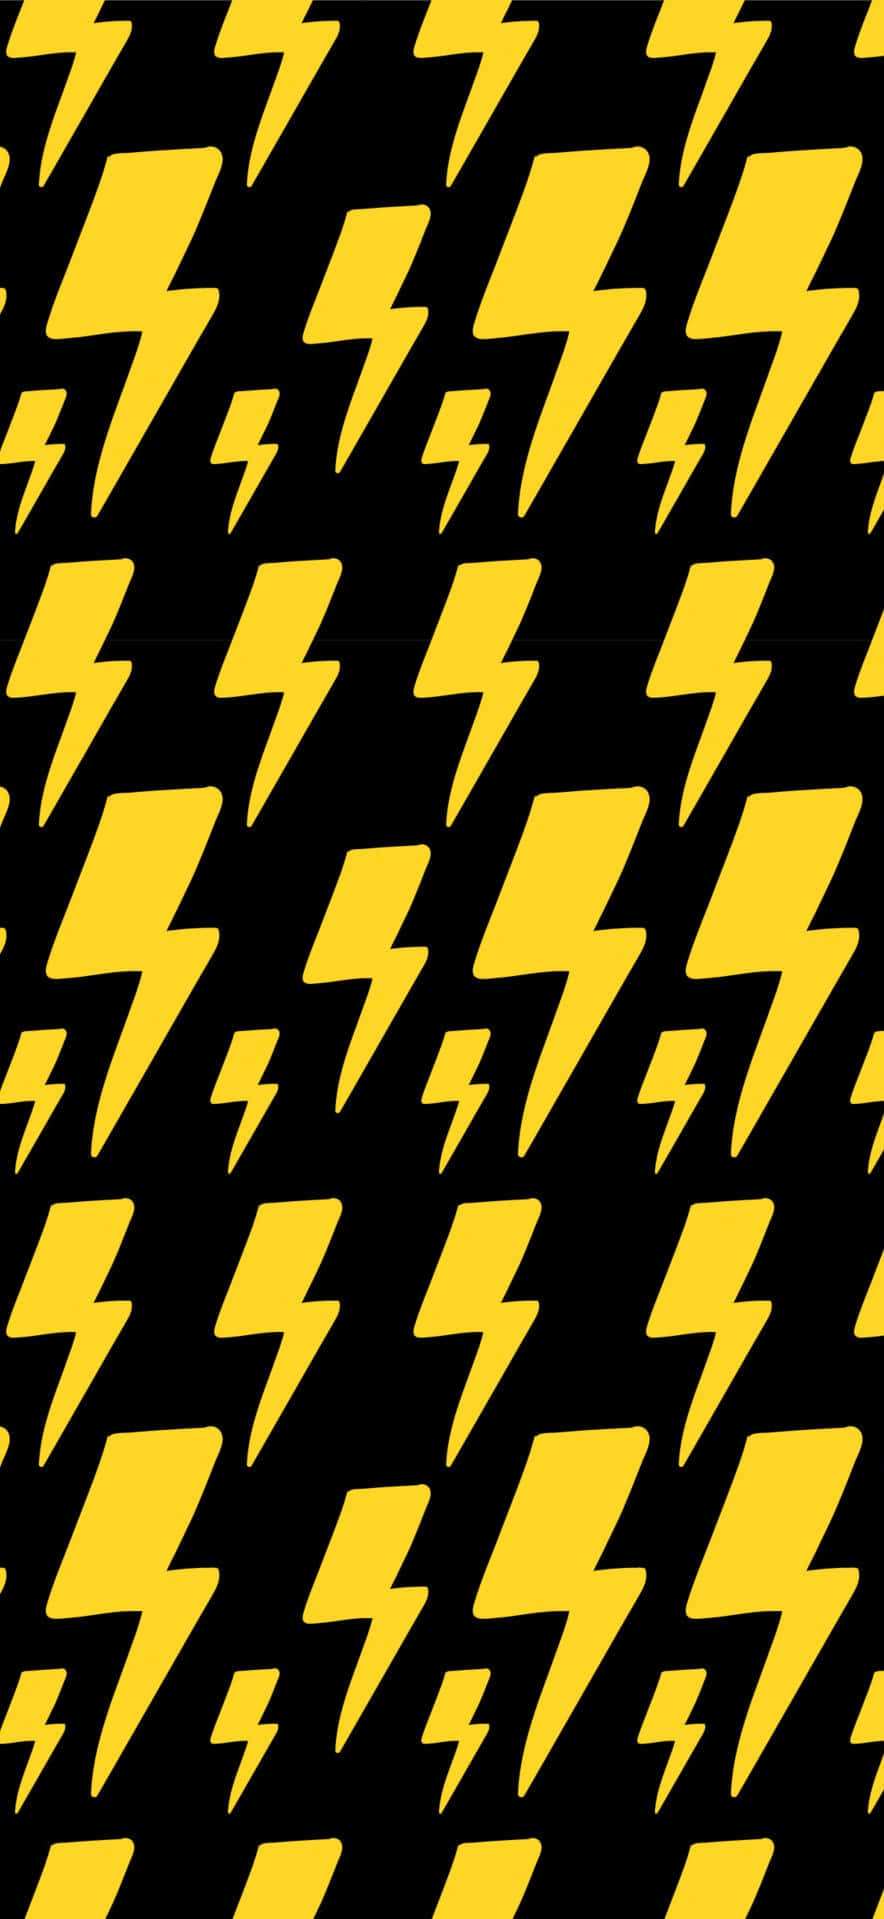 Lightning Bolt Iphone Wallpaper